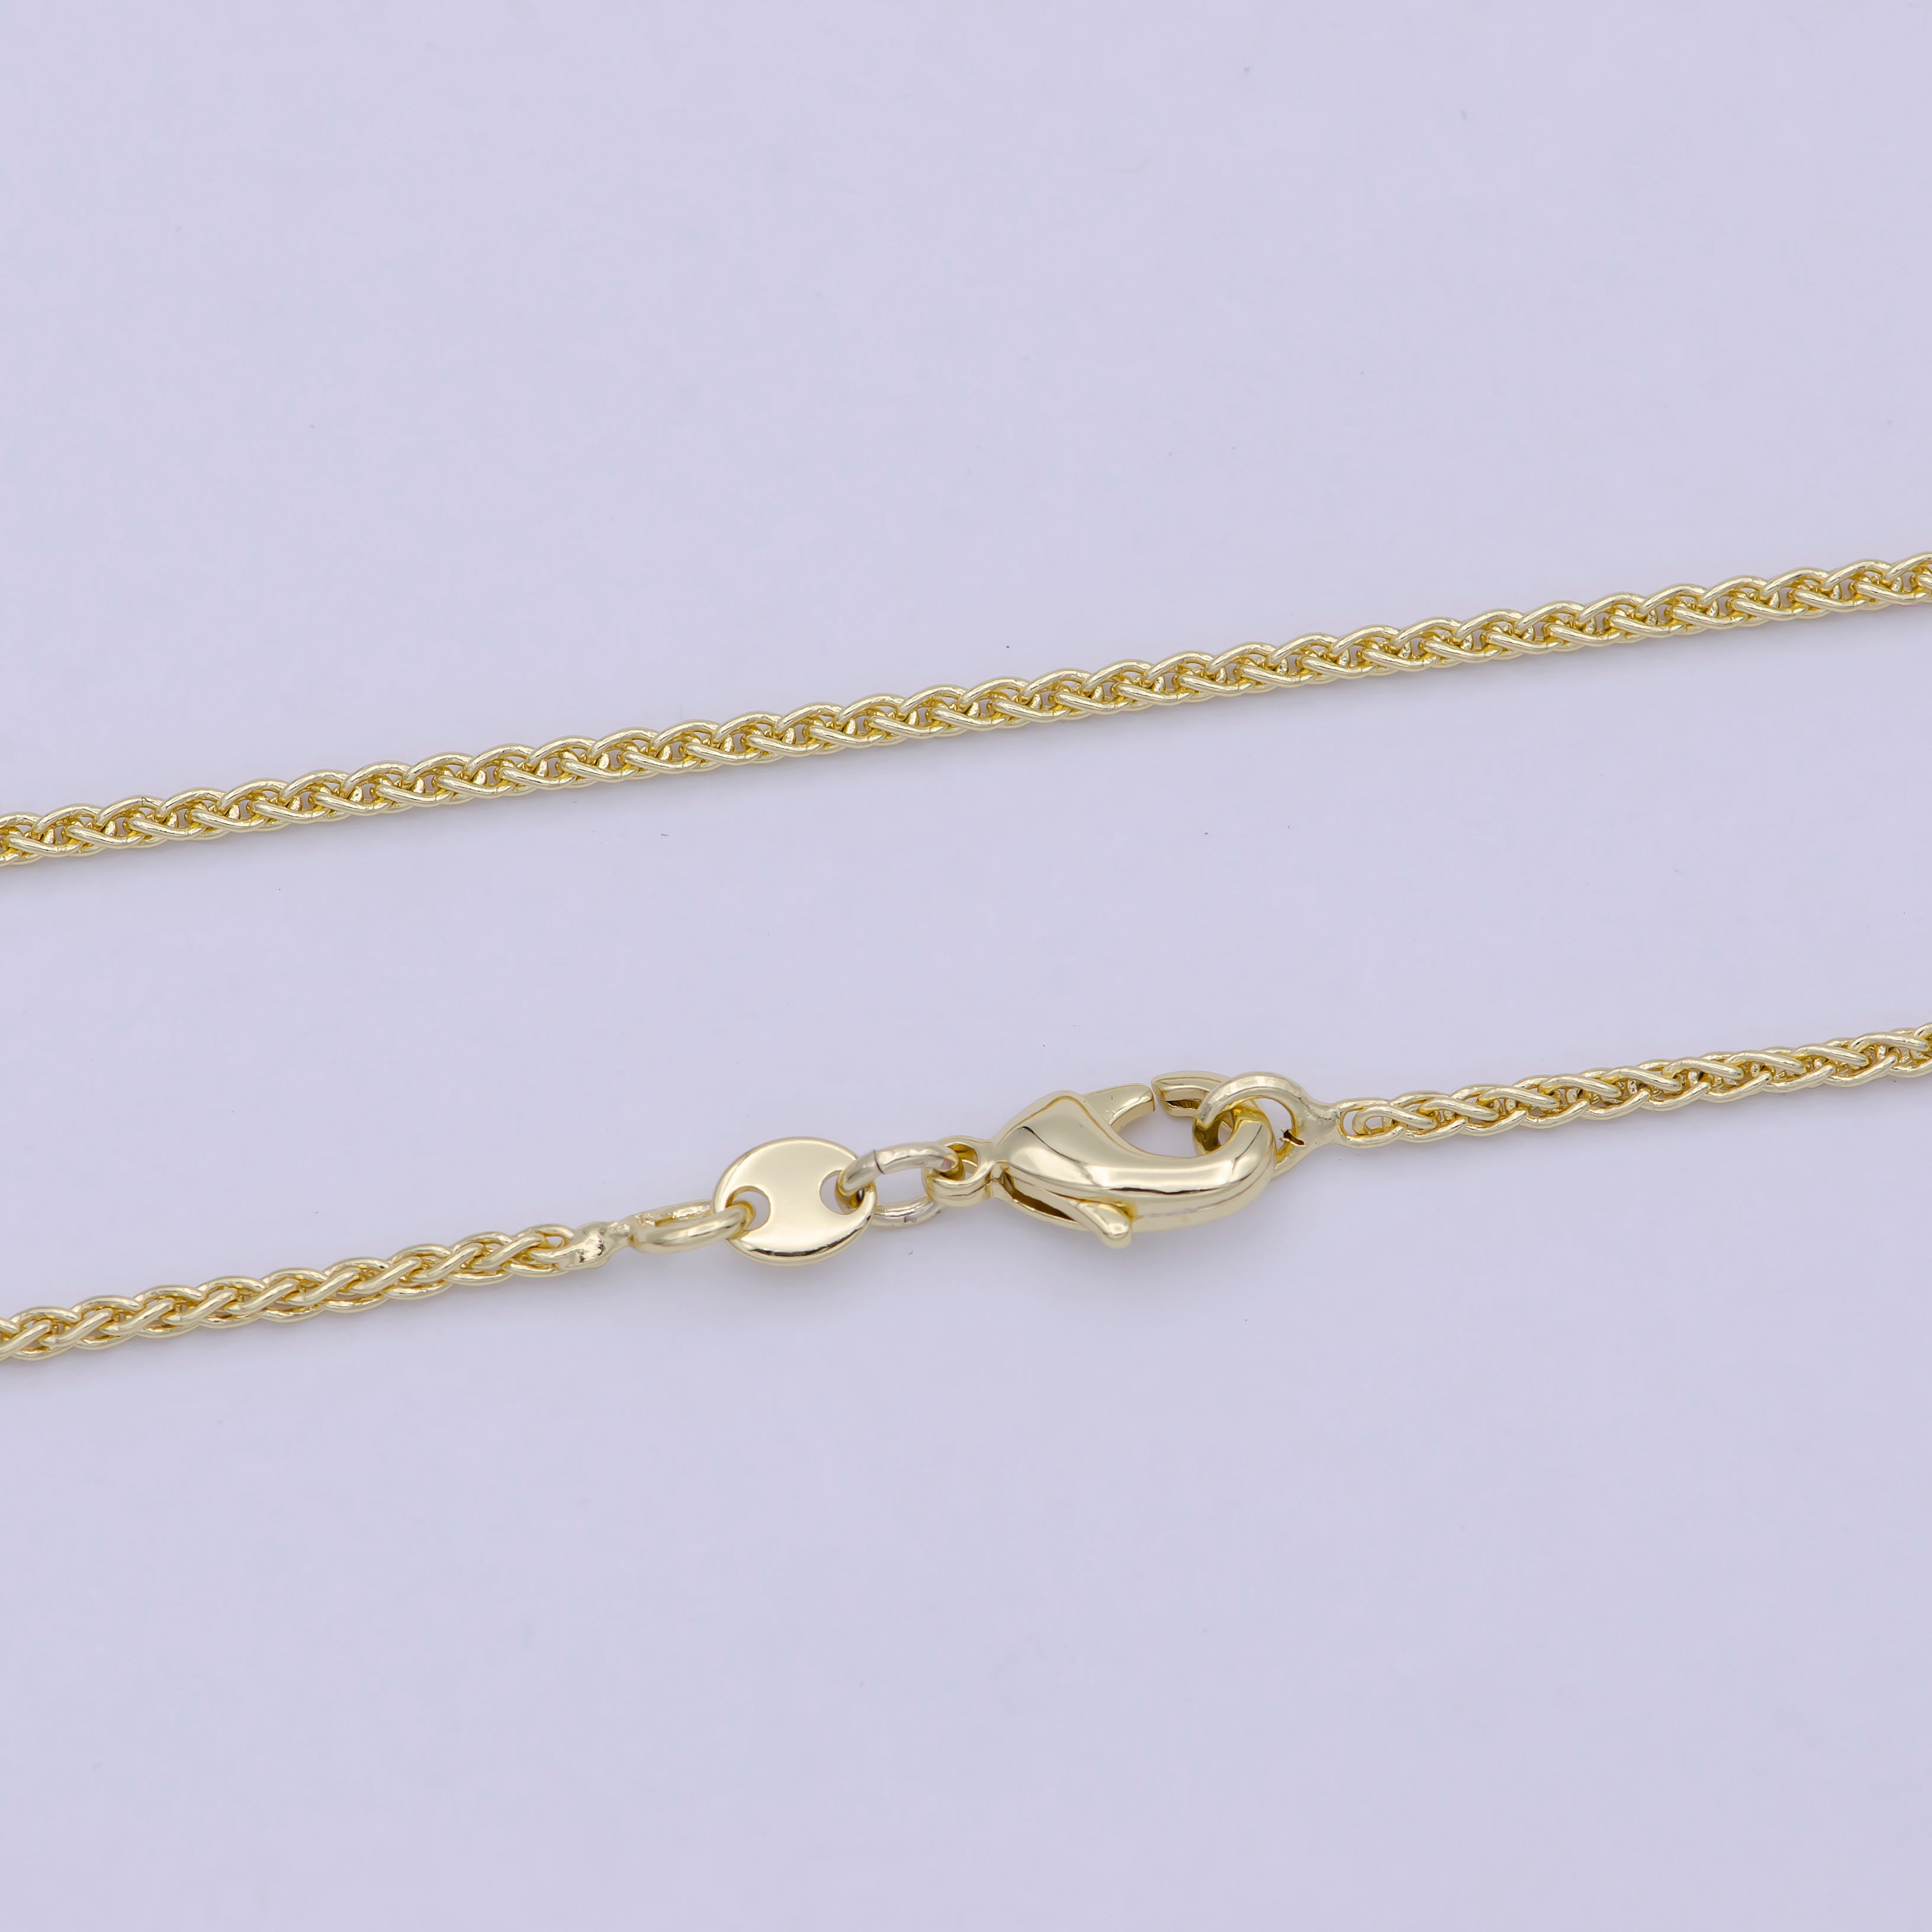 14K Gold Filled Wheat Chain Foxtail Chain Necklace, Man Ladies Gold Chain, Trending Gold Chain Necklace WA-755 - DLUXCA